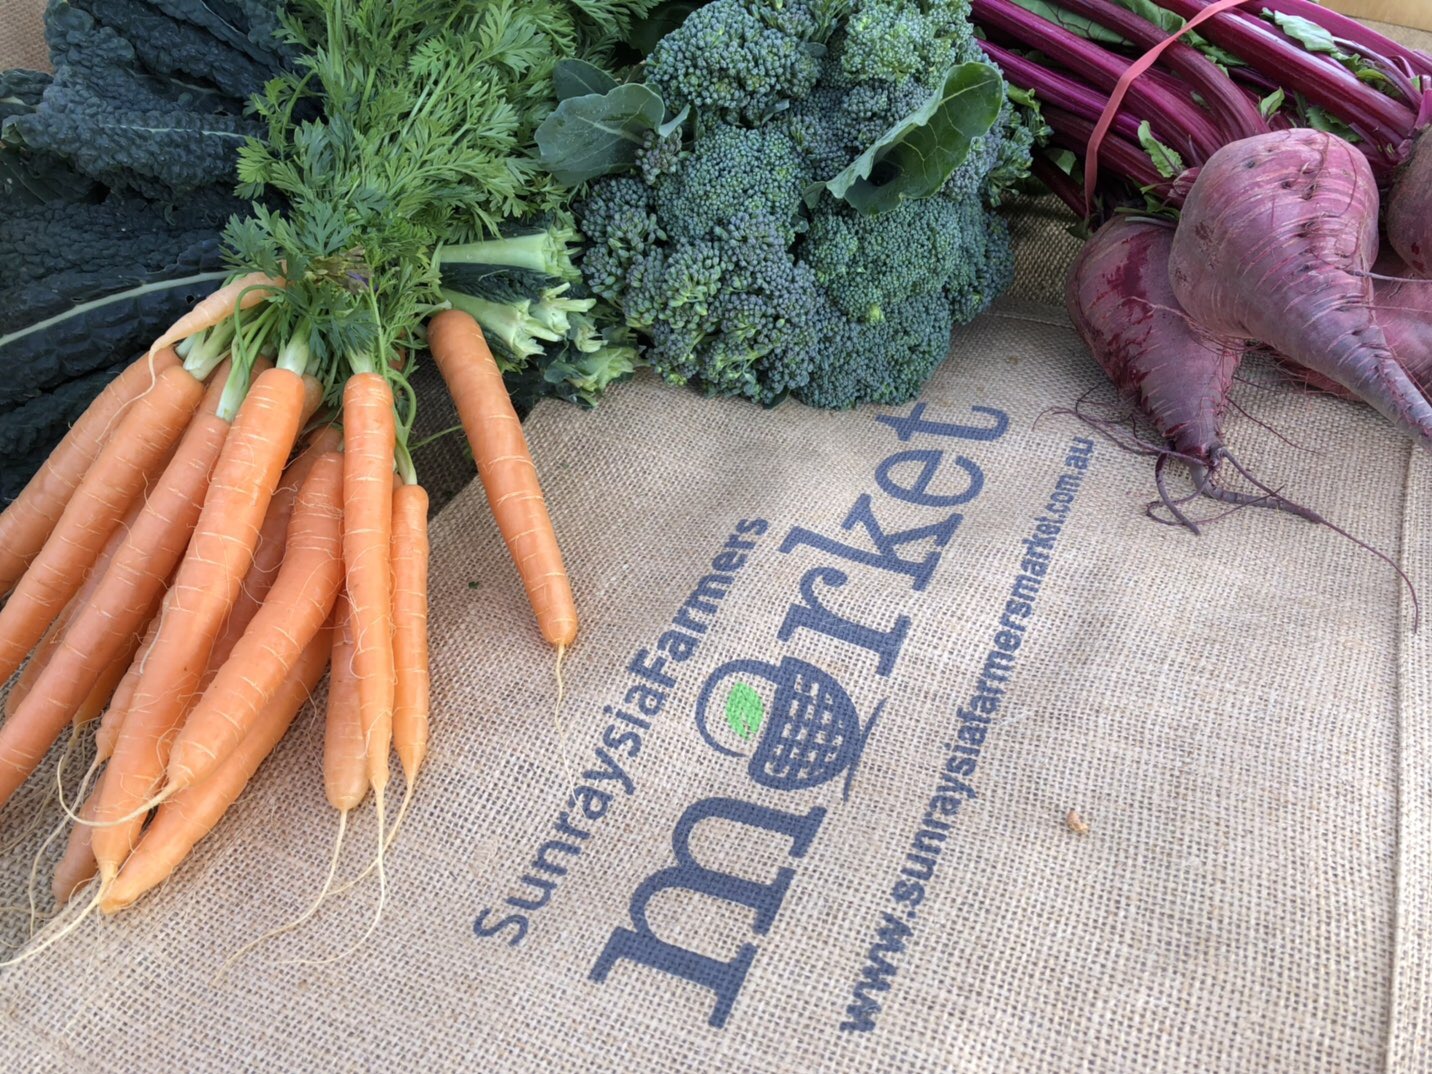 Farm Fresh Produce, pick up a reusable SFM Market bag